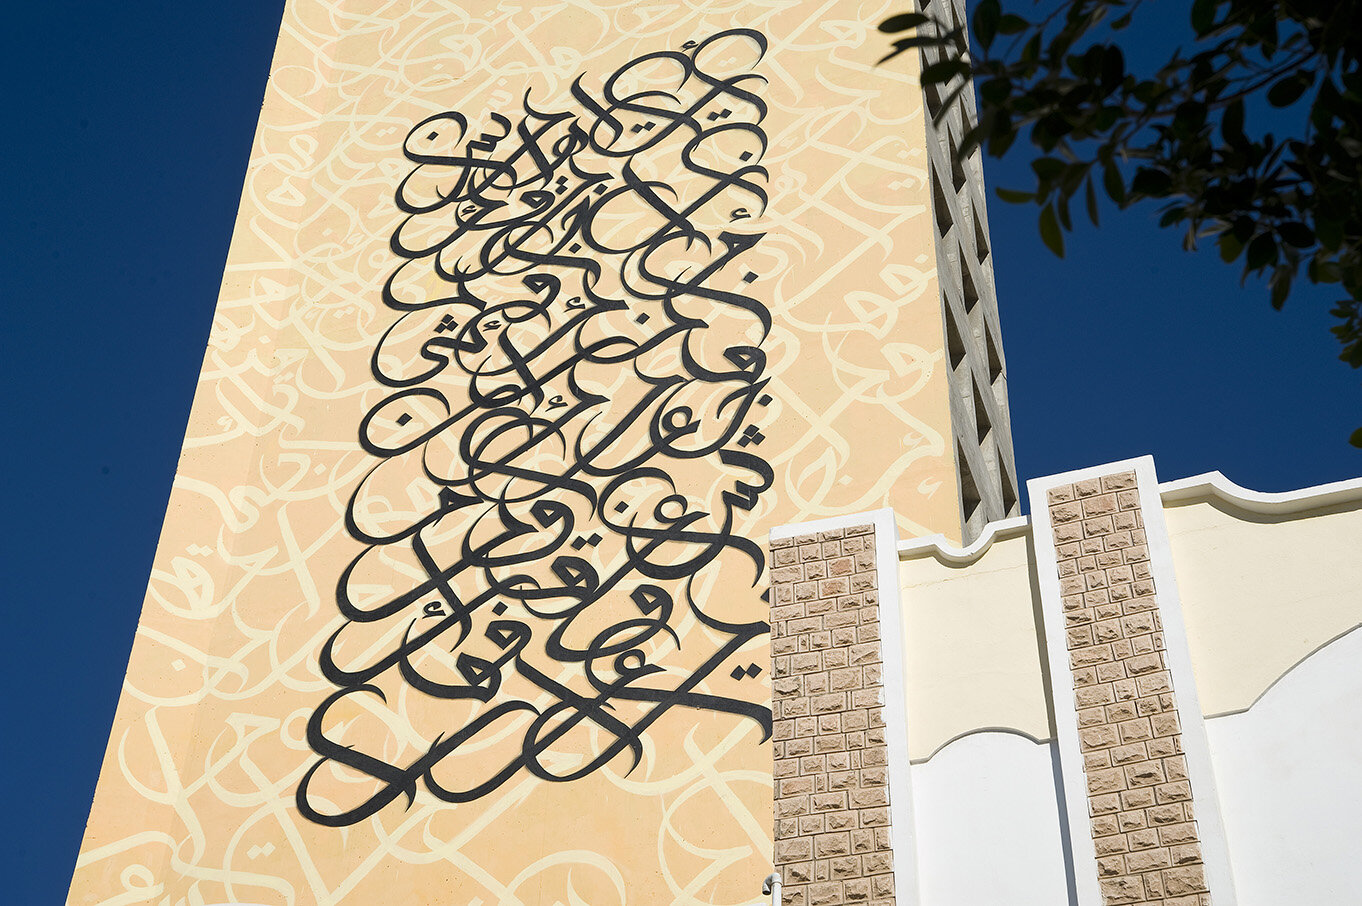 Gabes El Seed Mosque graffiti ph. Claudia Wiens 